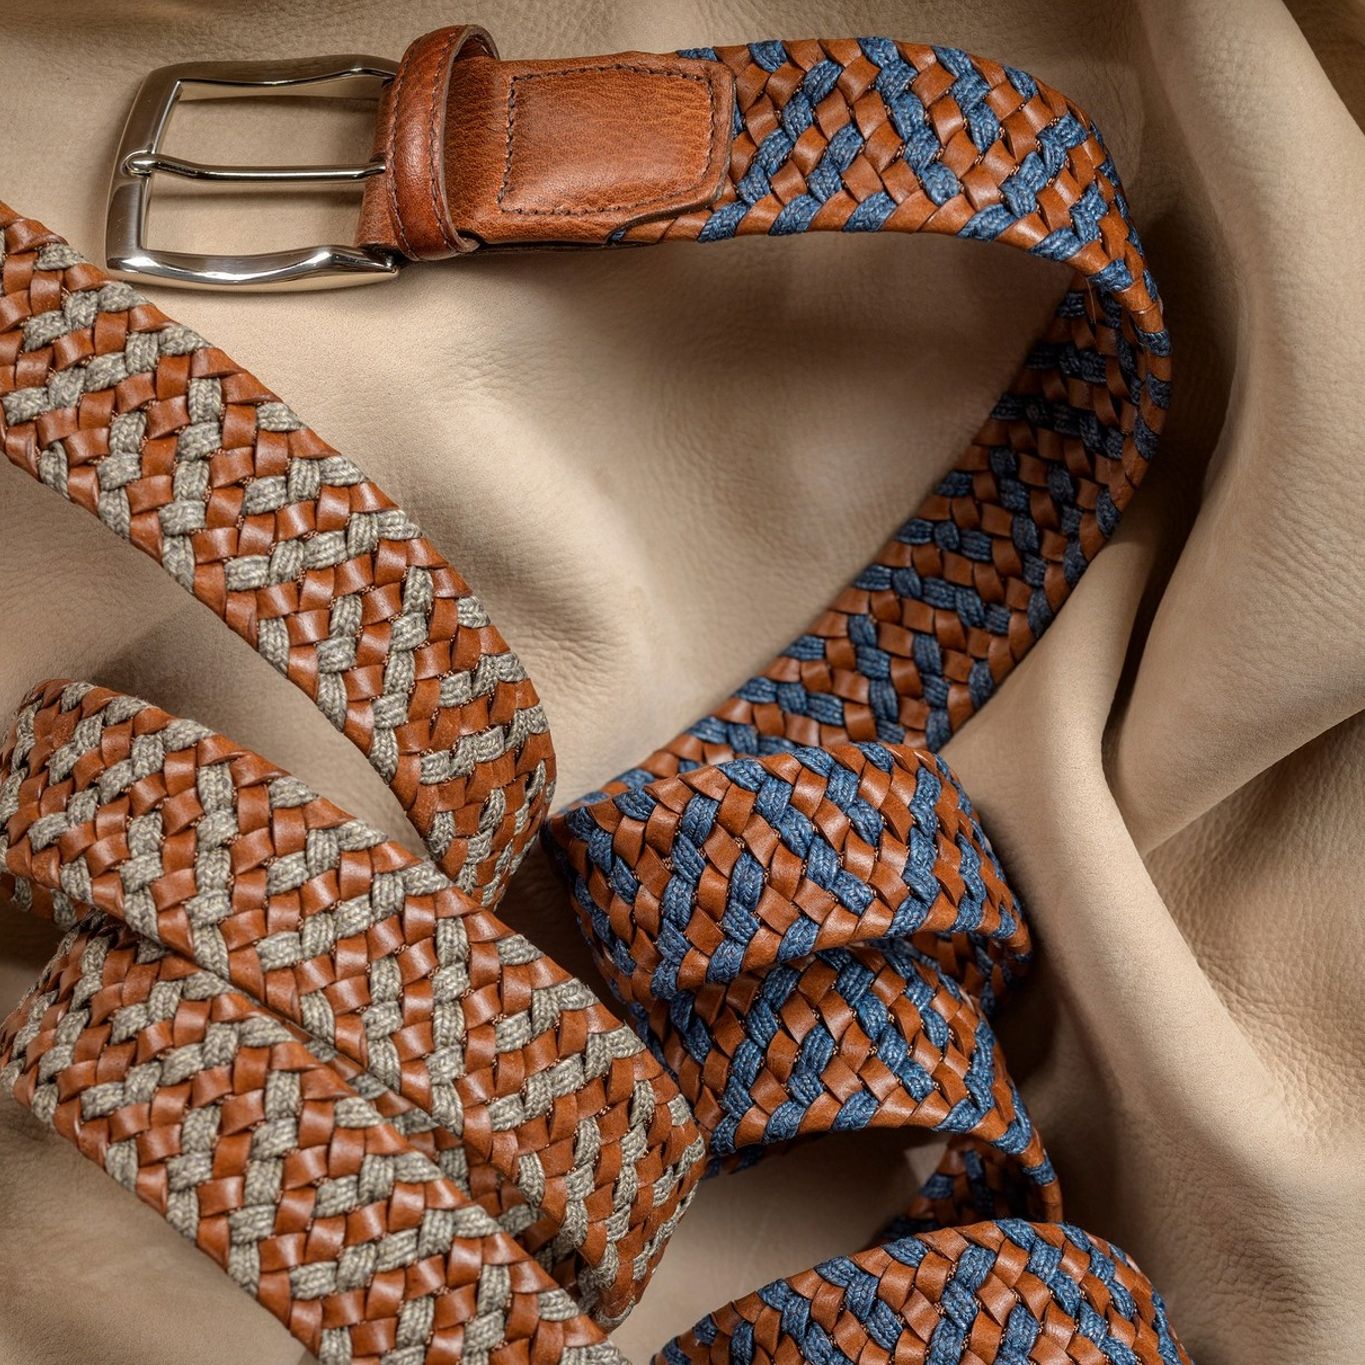 J.Crew: Classic Belt In Italian Leather For Women